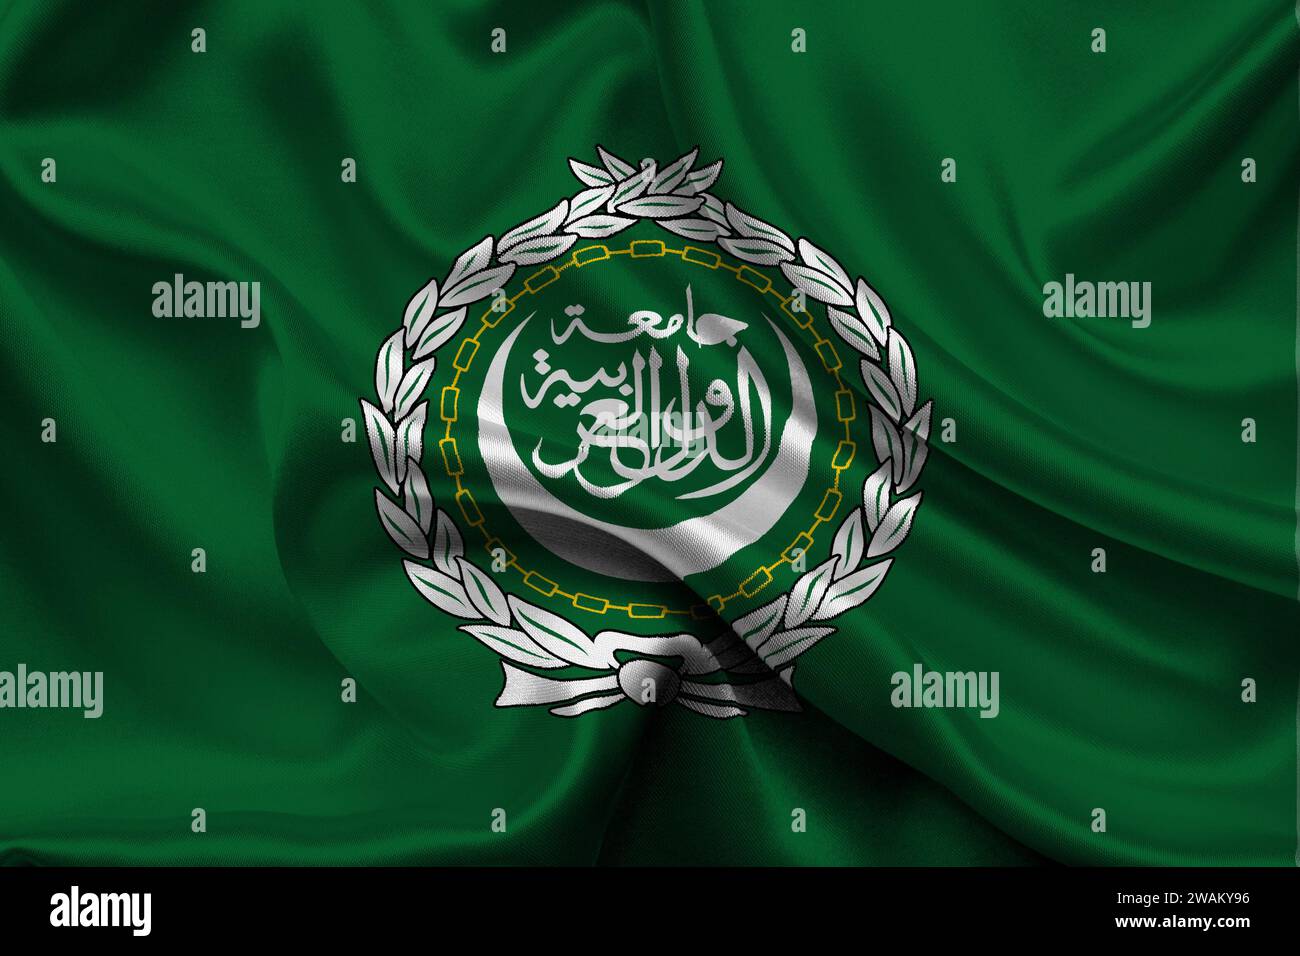 High detailed flag of Arab League. National Arab League flag. Asia. 3D illustration. Stock Photo